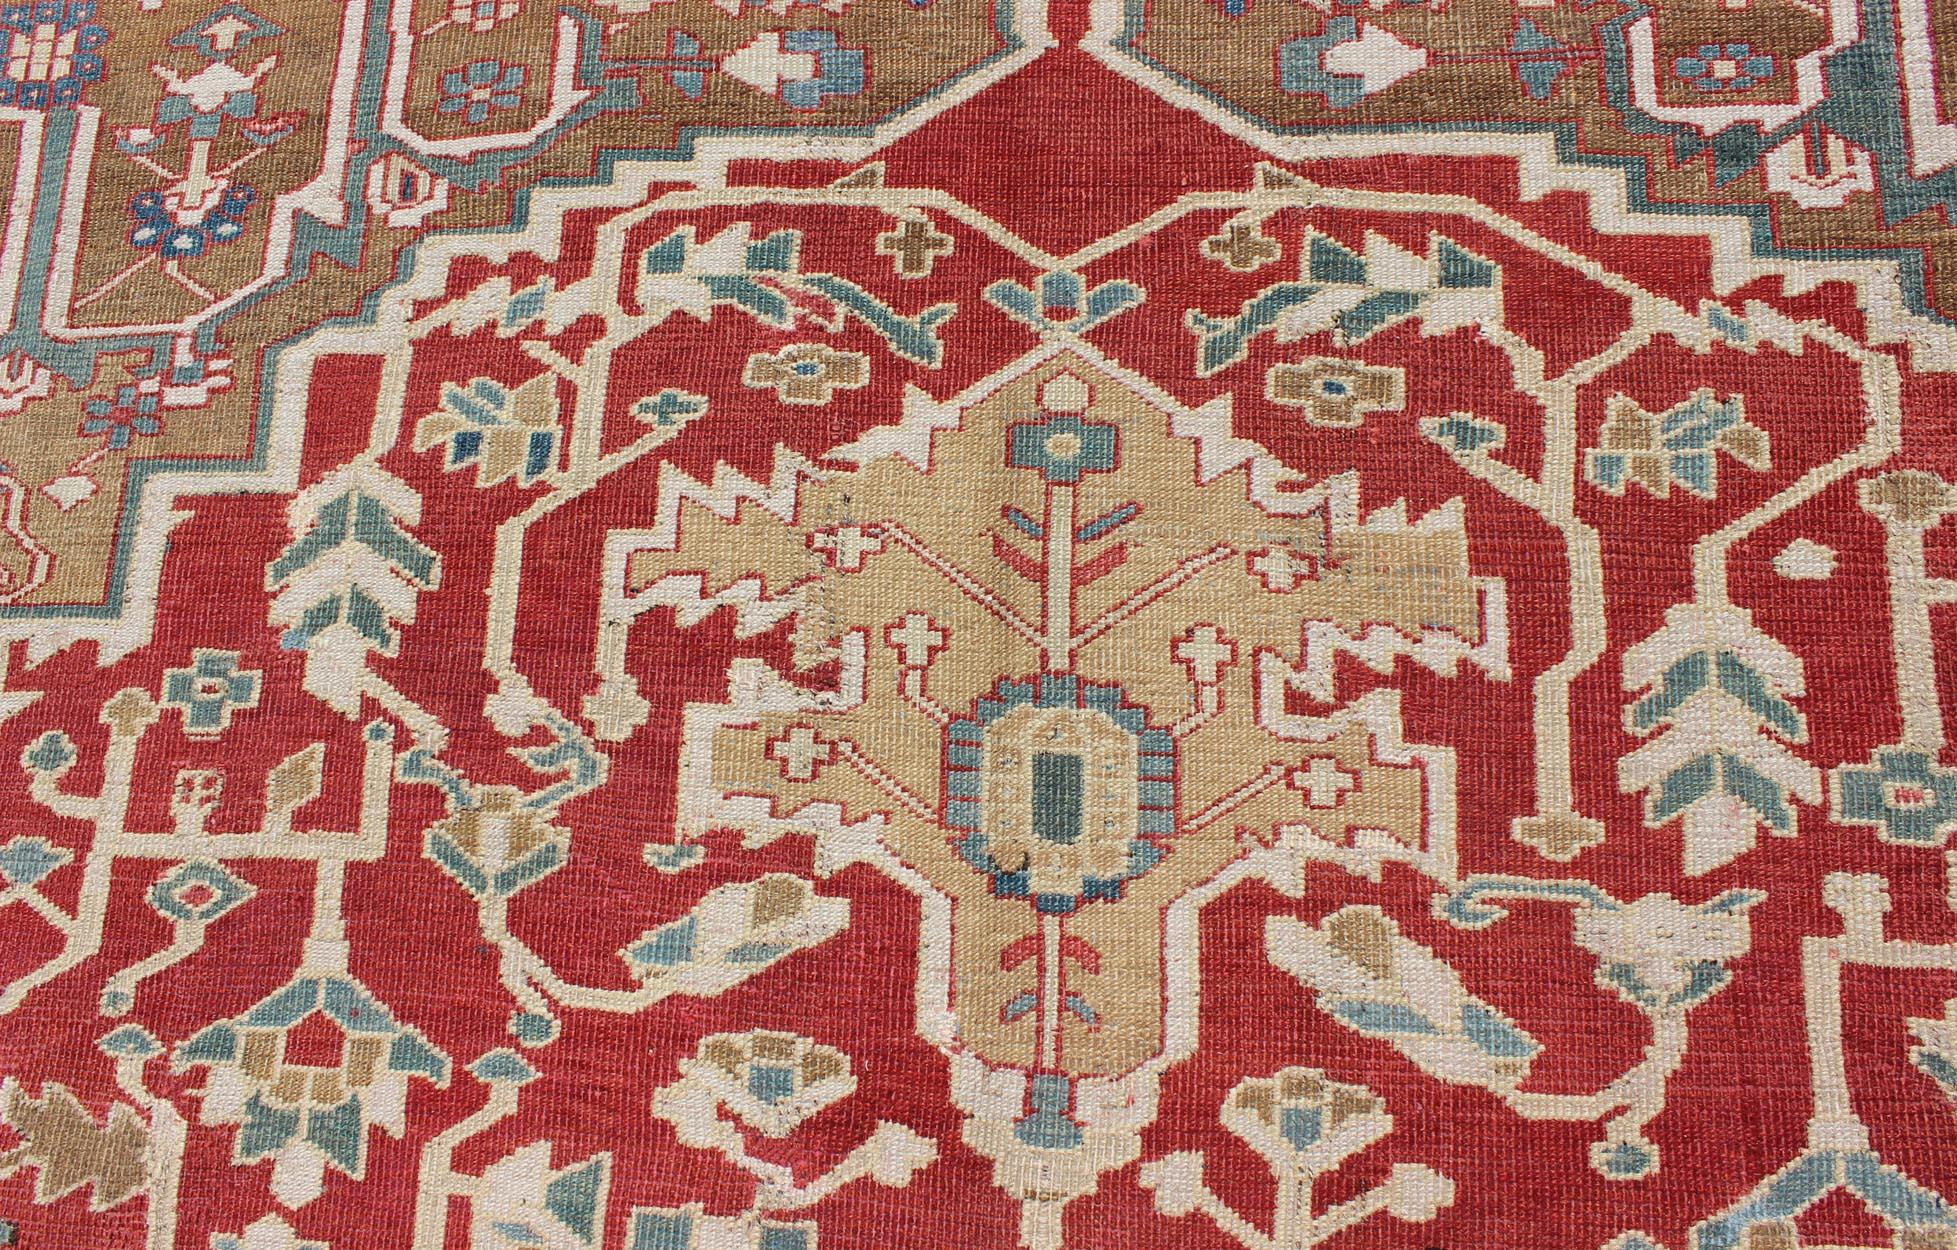 Antique Persian Serapi/Bakhshaiesh Rug in Brick Red, Light Blue & Camel Colors 1